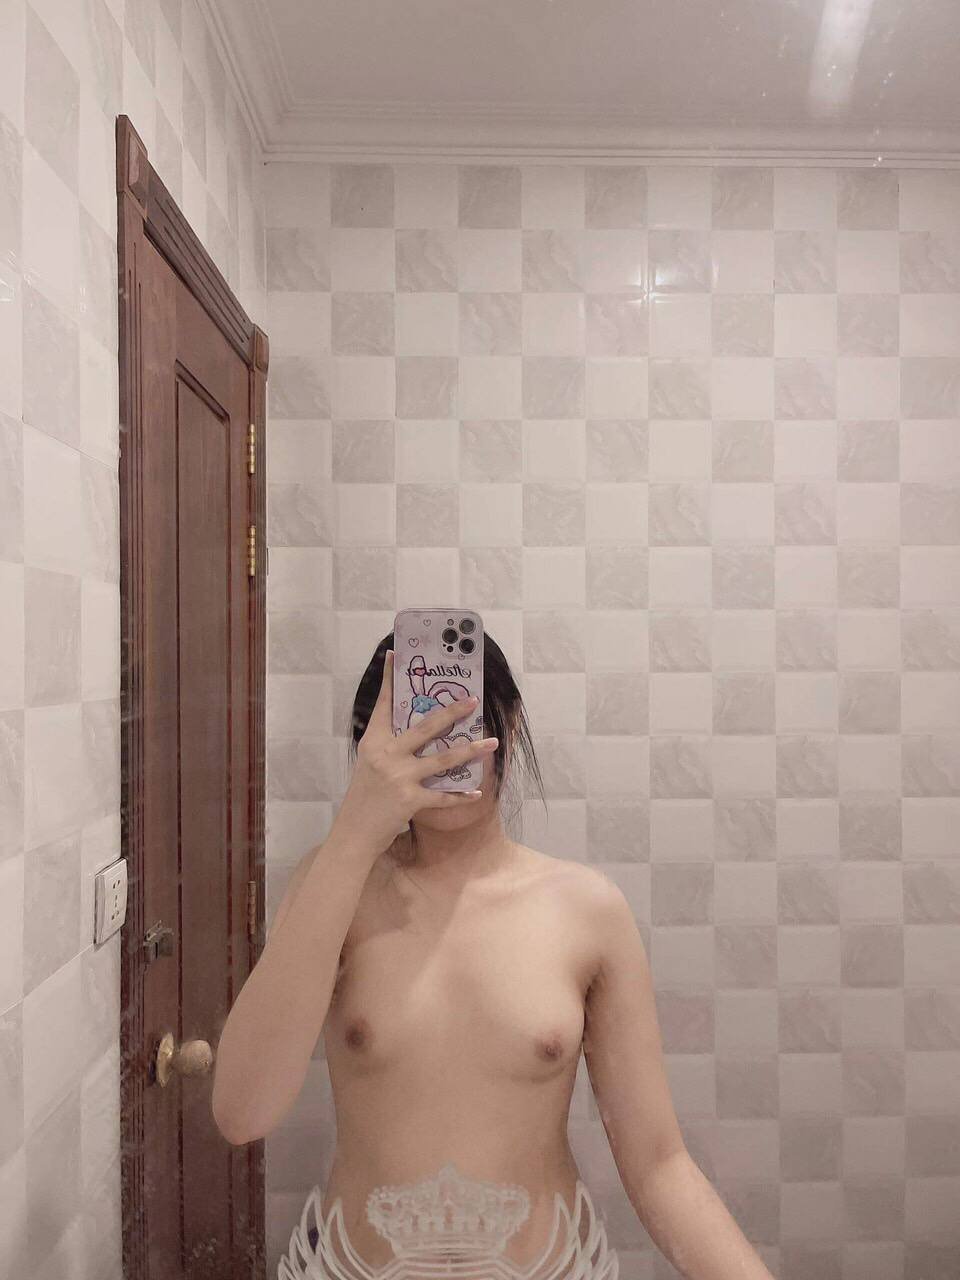 Vietnam Leaked - Selfie in front of mirror